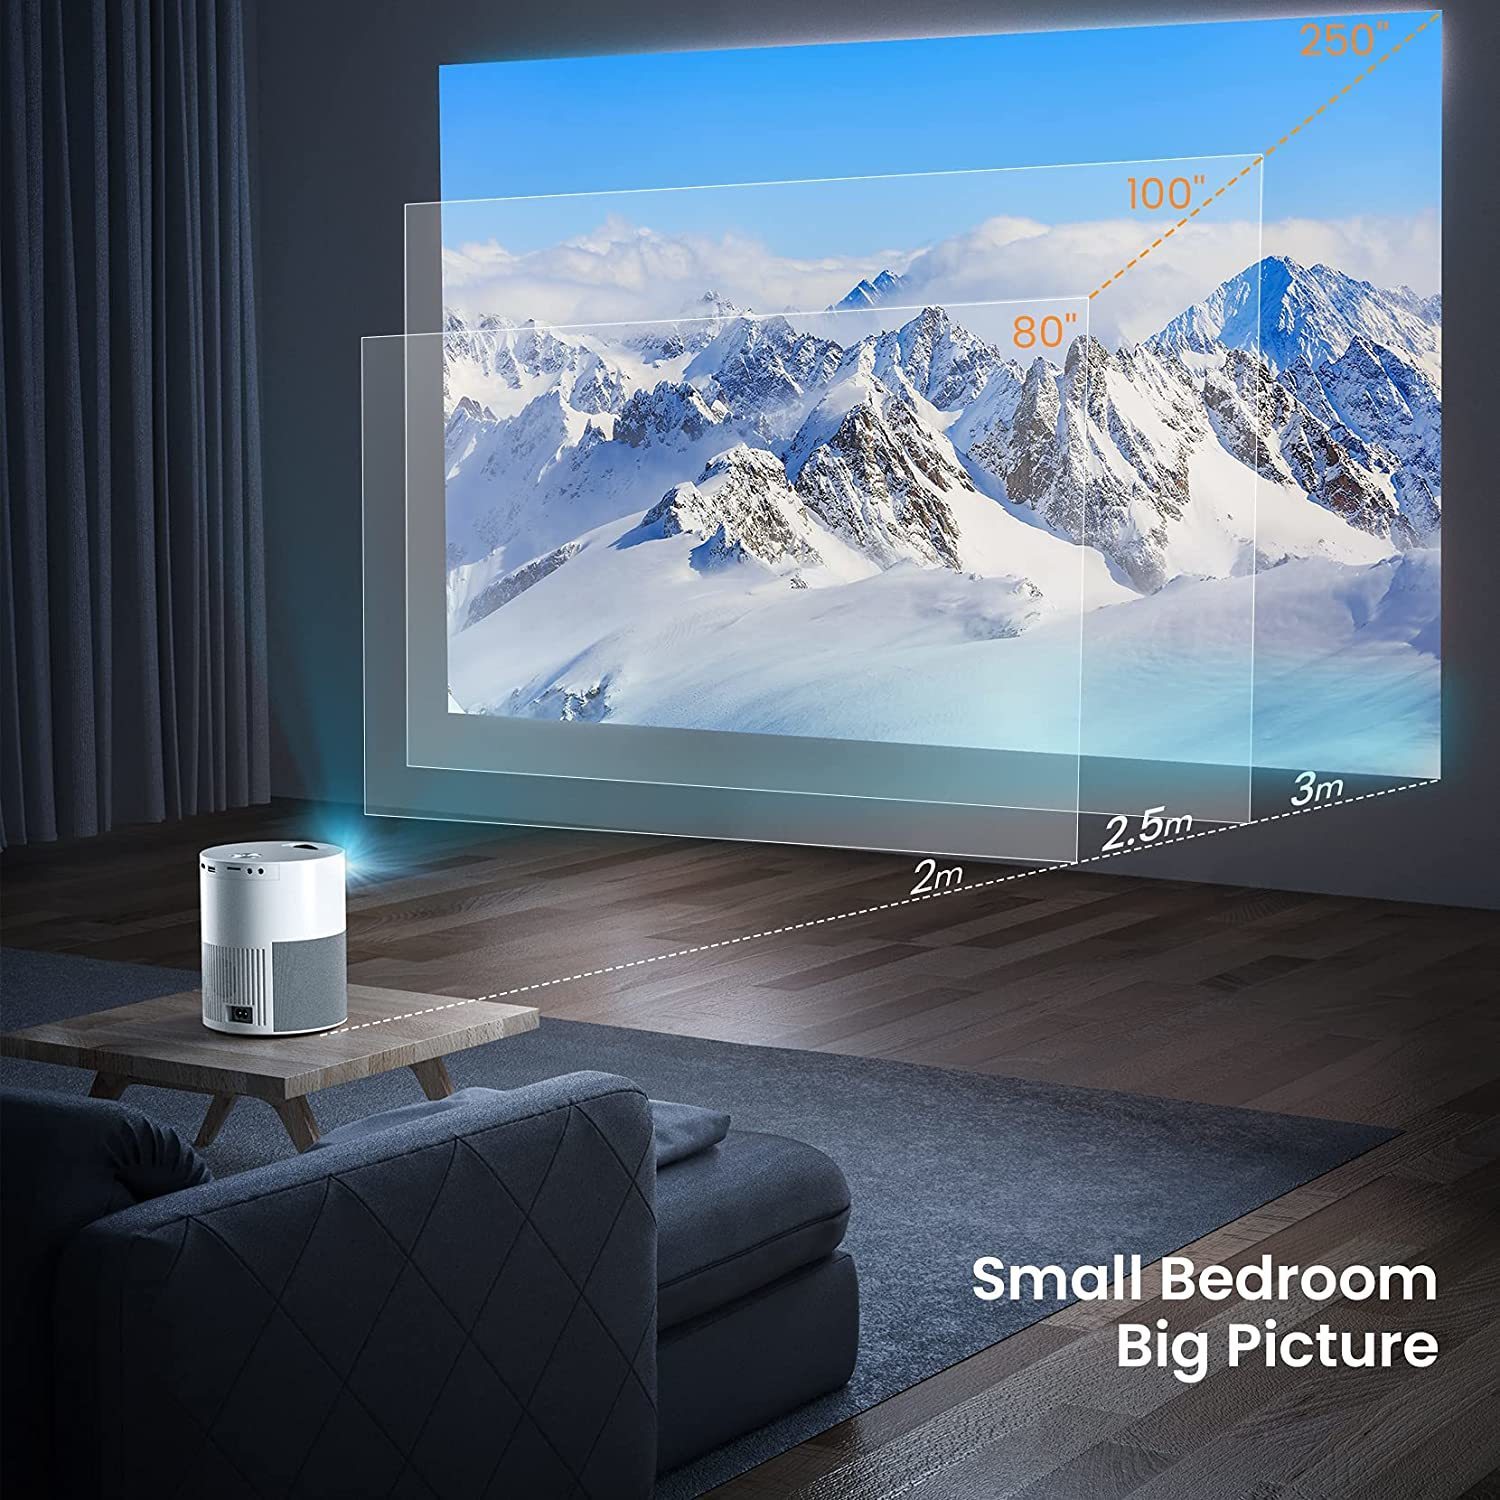 Проекторы Salange Full HD 1080p Native 1920x1080 Android Bluetooth Home Theatre видео Beamer Mini Led для телефона 221027